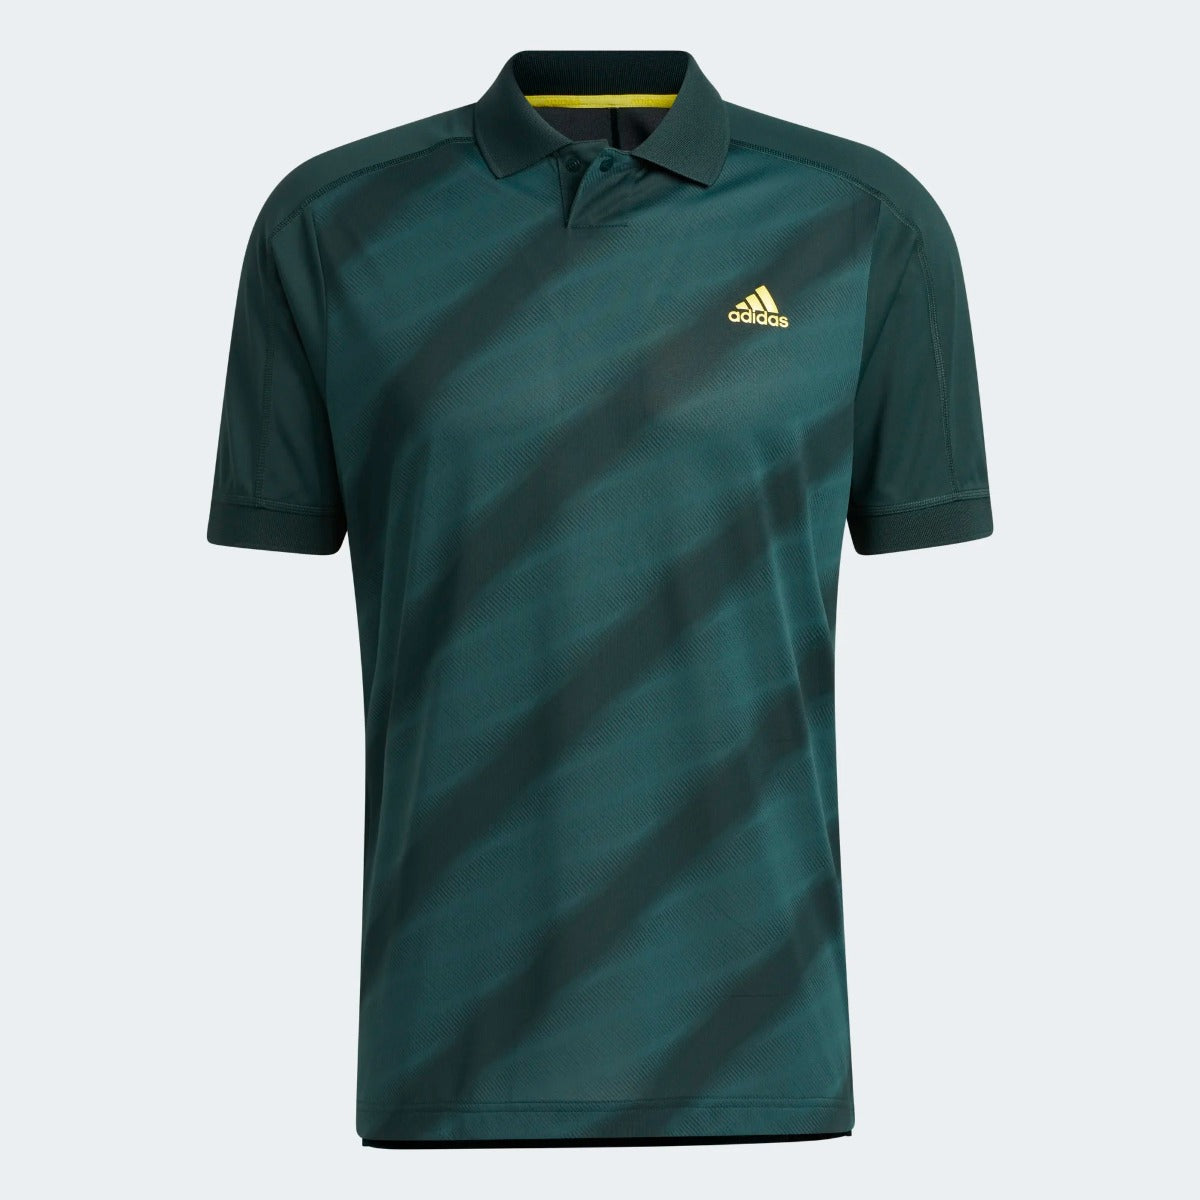 Adidas Statement Polo Shirt Men’s (Green)